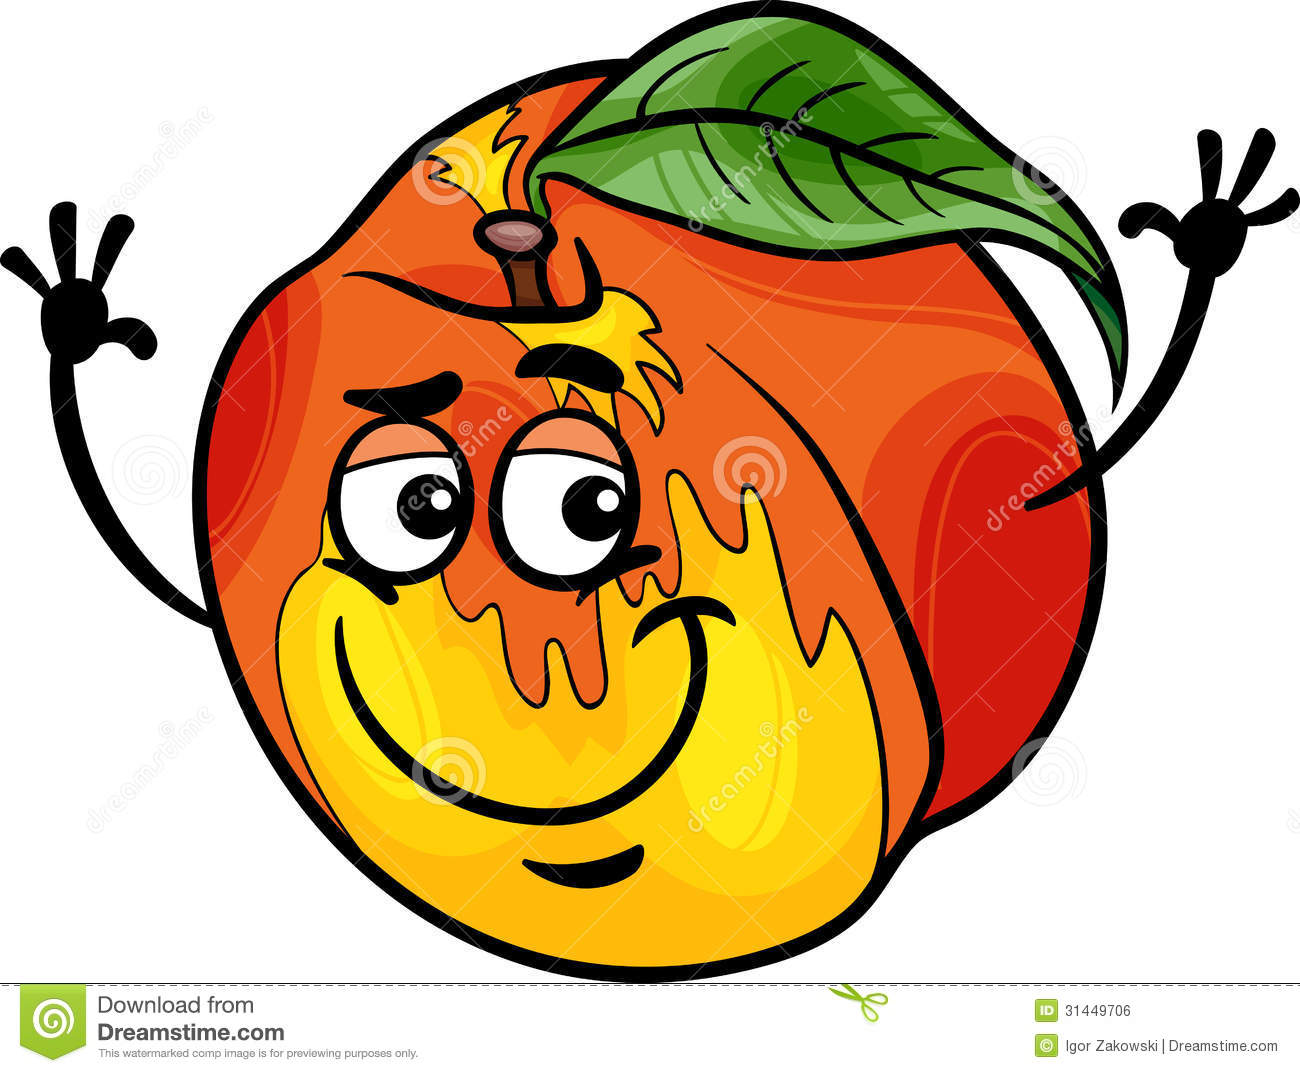 Funny Peach Fruit Cartoon Illustration Royalty Free Stock Image